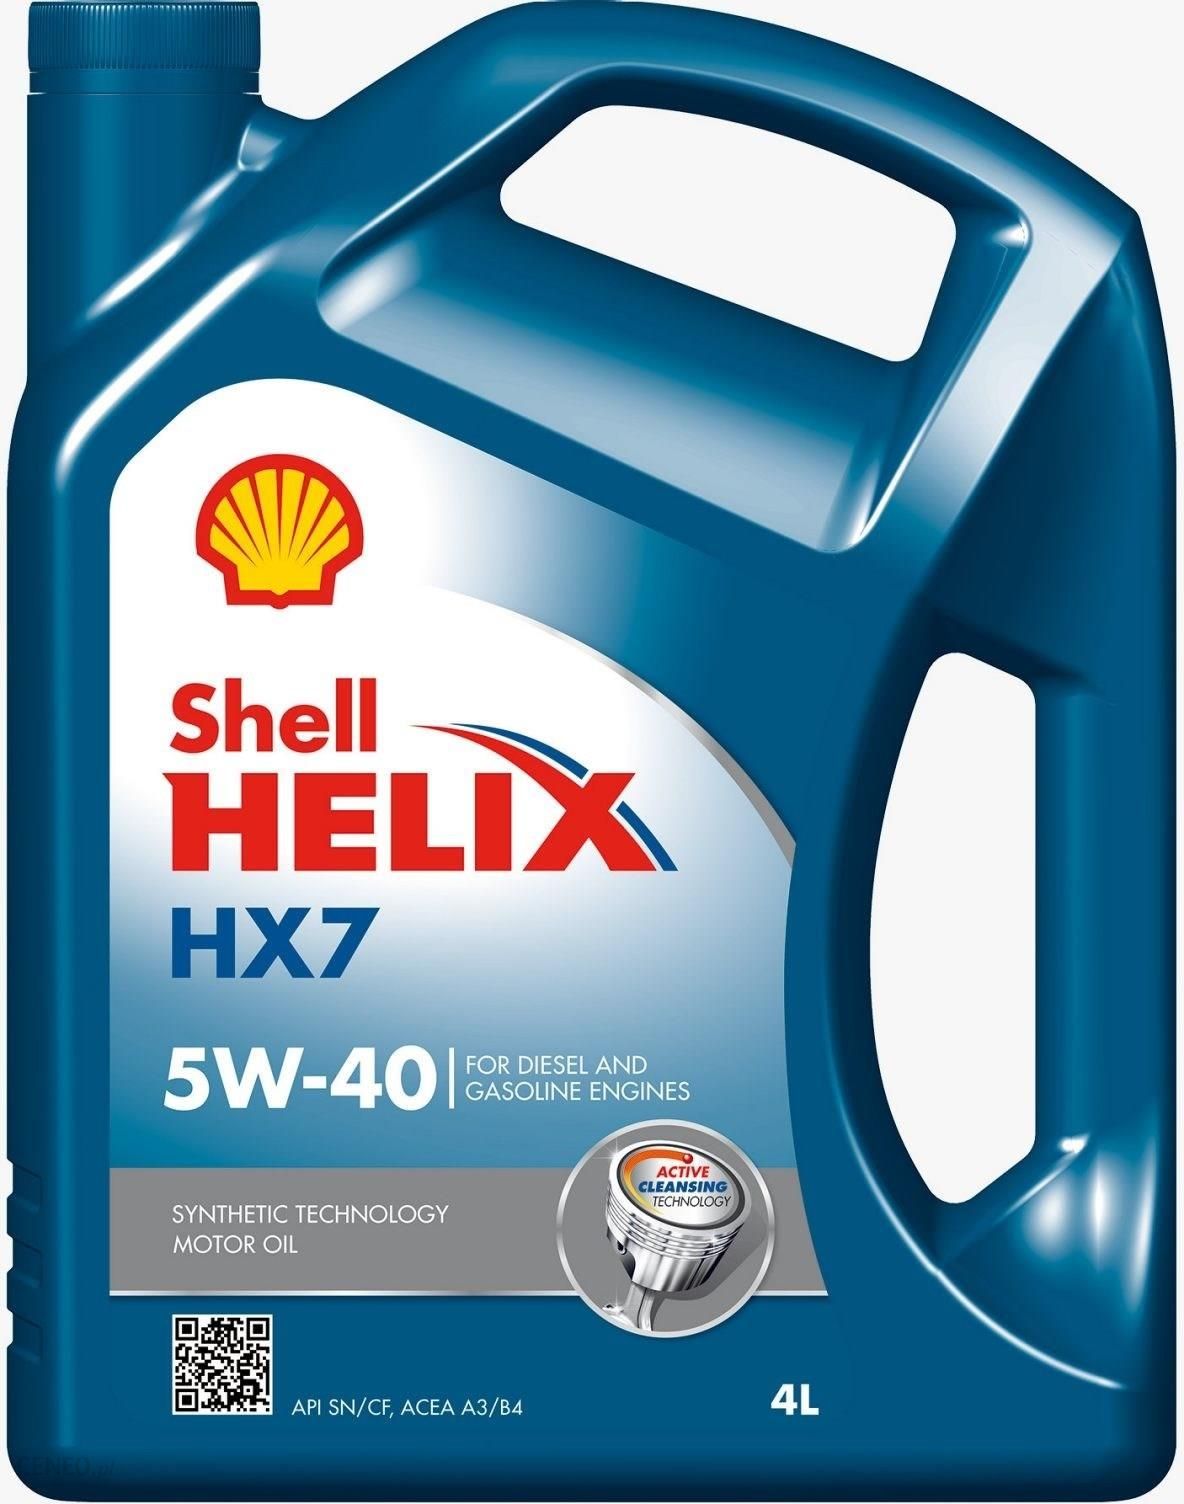 Shell Olej Silnikowy 550053770